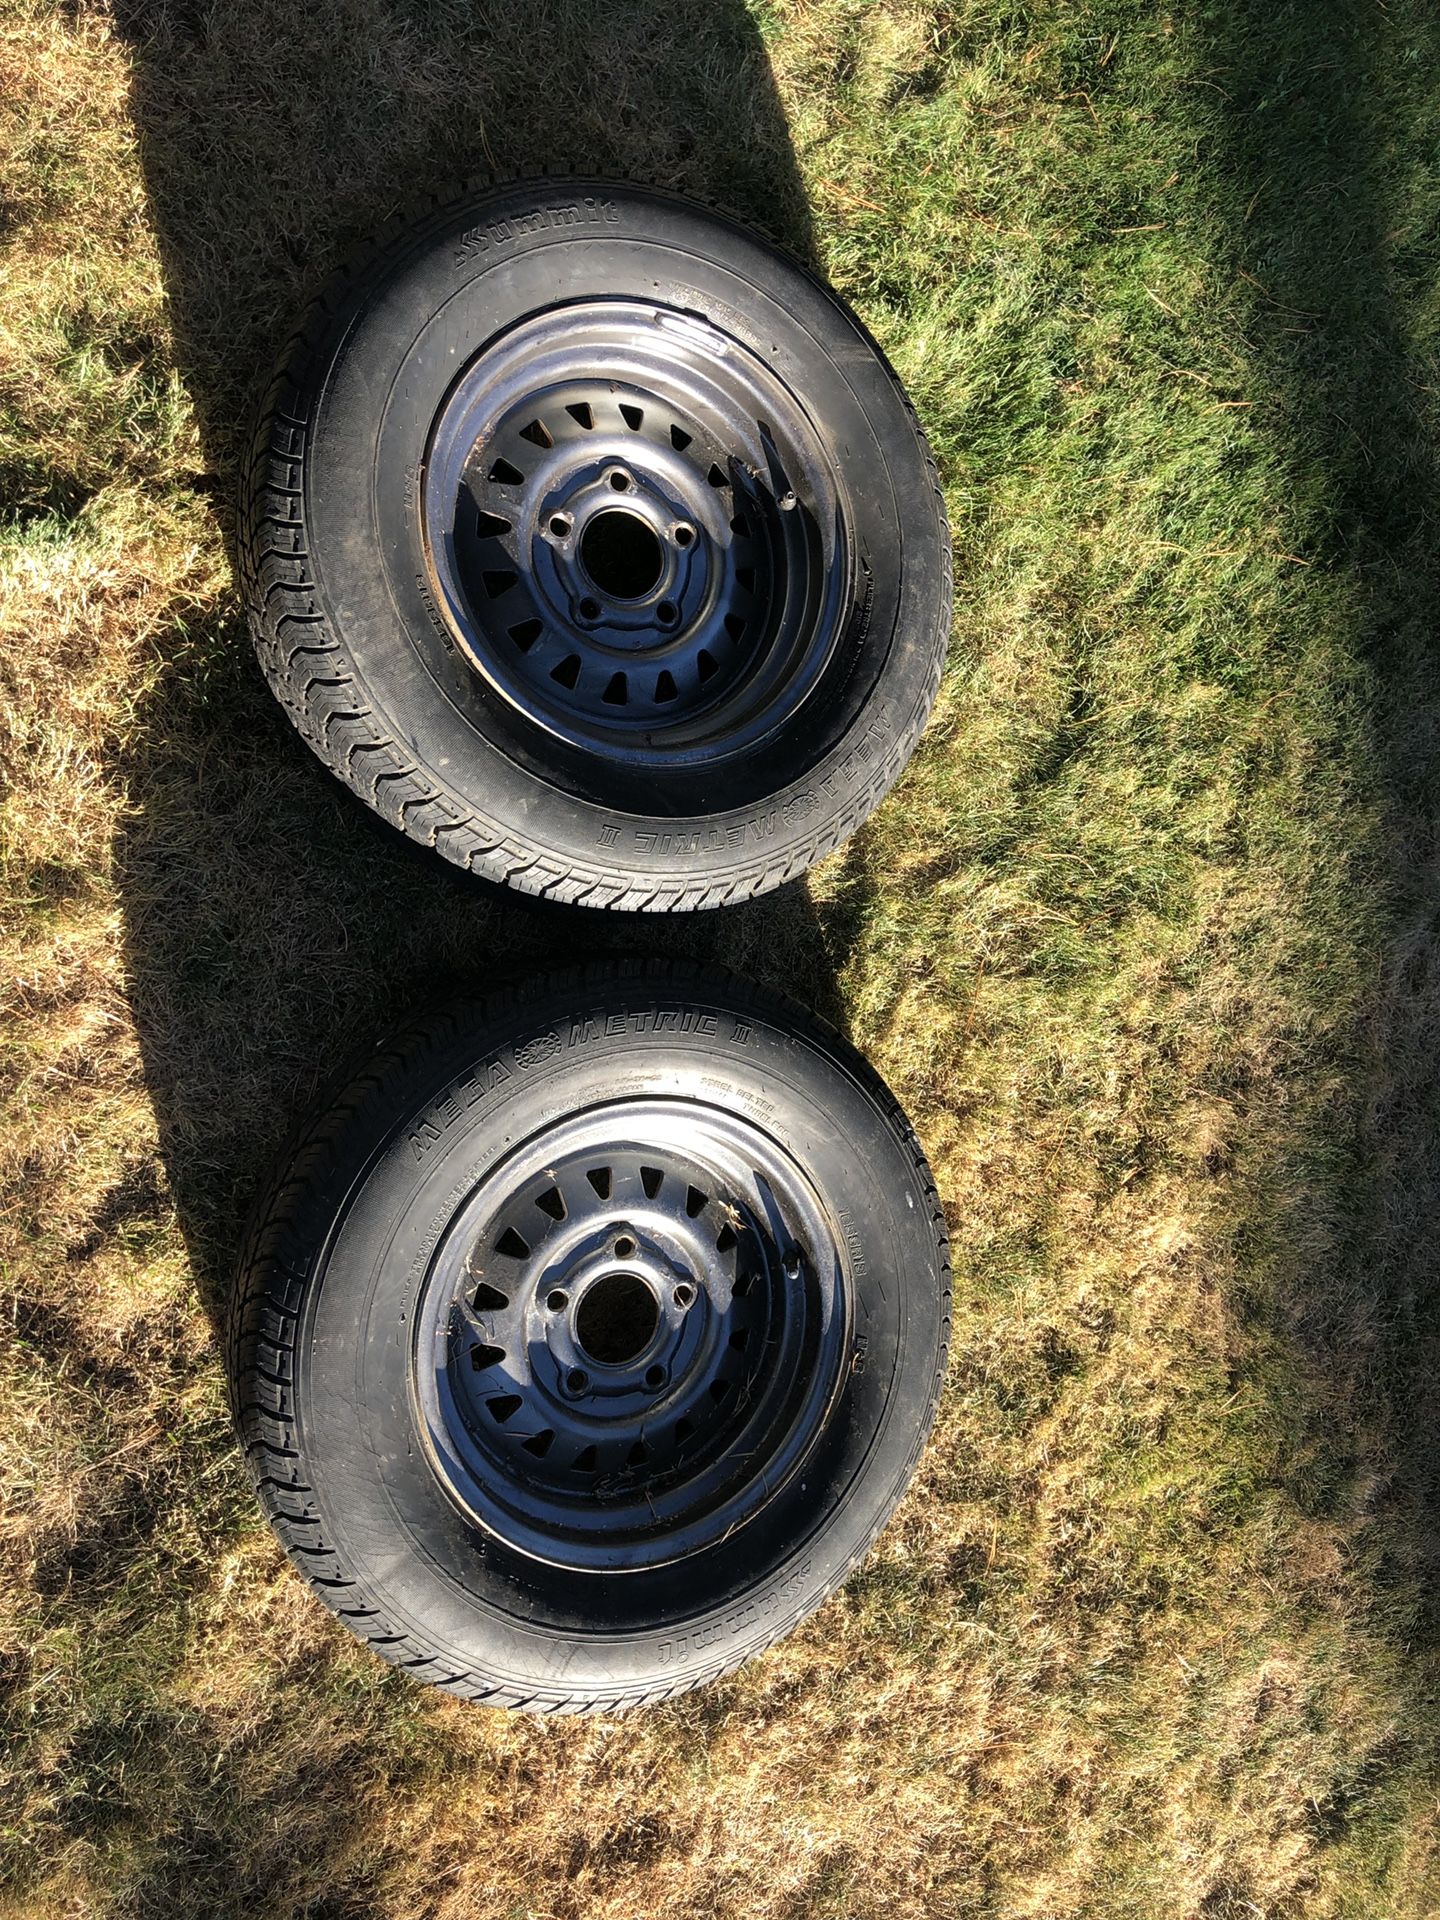 Pair of trailer tires